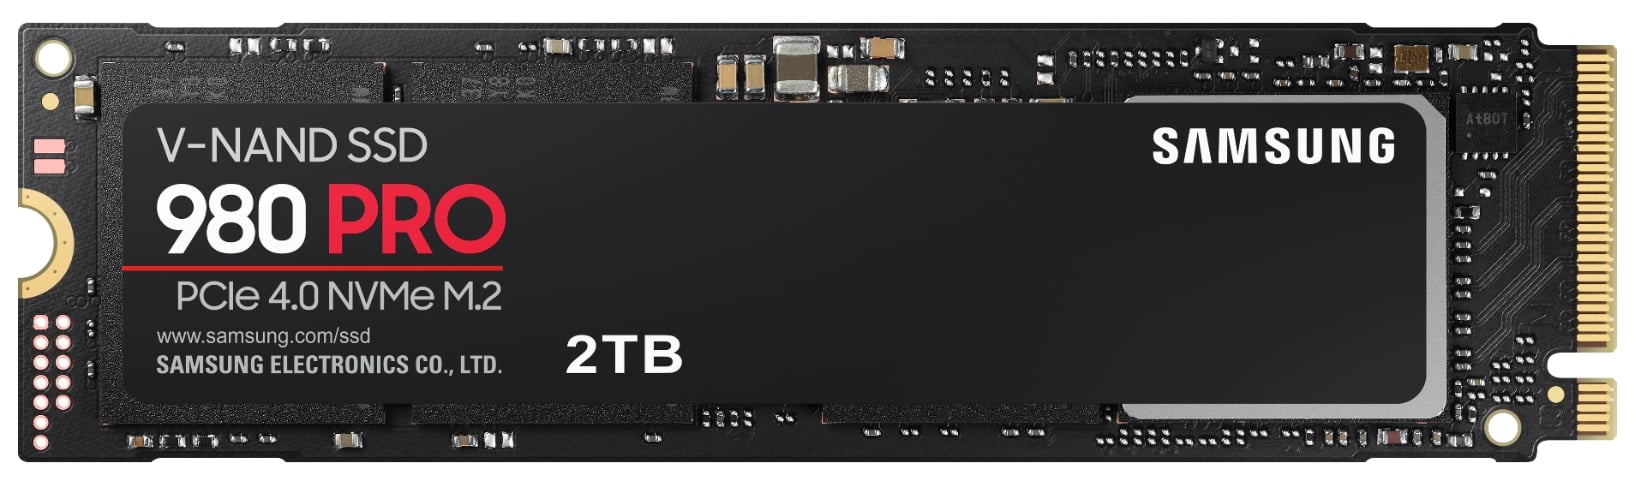 Samsung - An M.2, PCIe 4.0 SSD sporting a PCIe interface